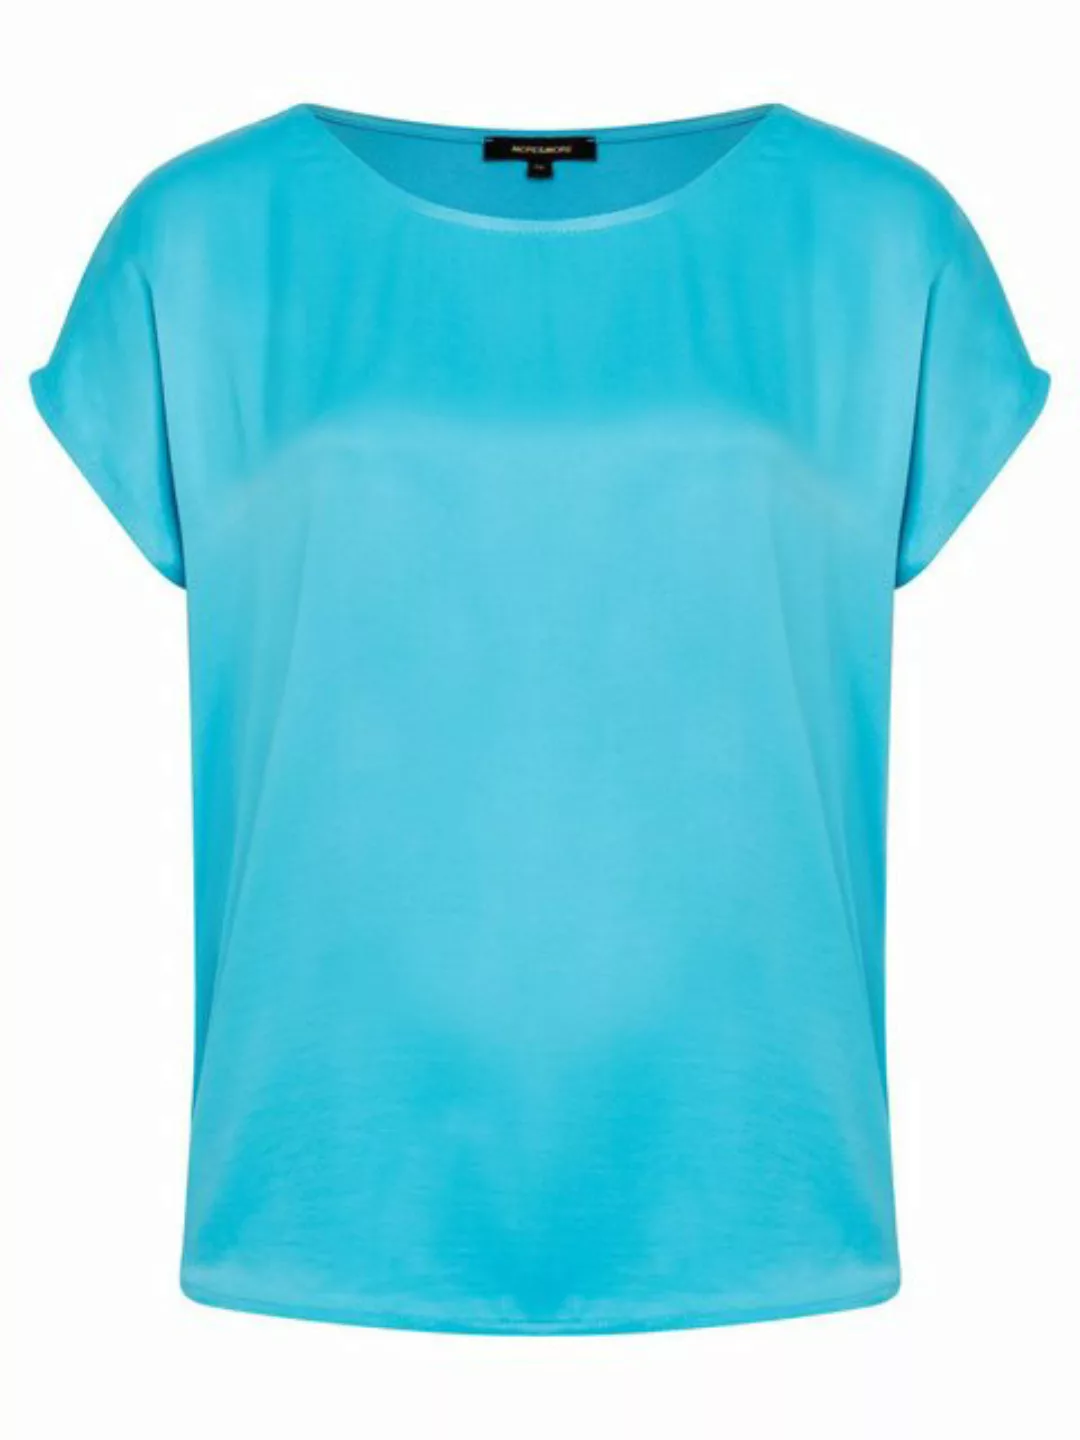 Shirt mit Satinfront, türkis, Frühjahrs-Kollektion günstig online kaufen